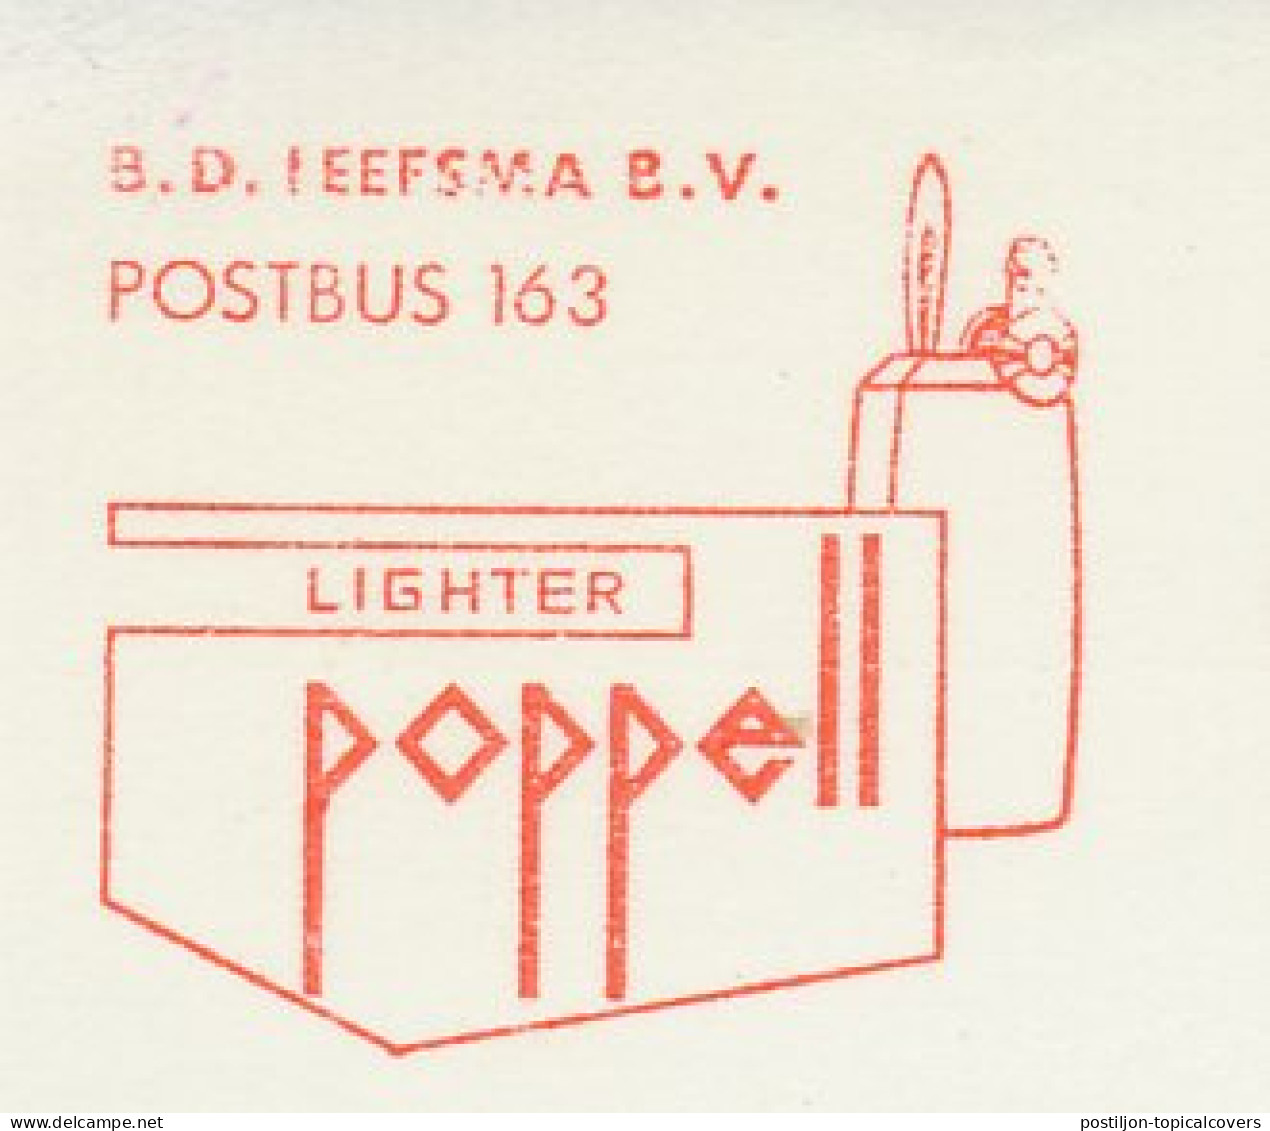 Meter Cut Netherlands 1972 ( Postbus 163 ) Lighter - Poppell - Tobacco